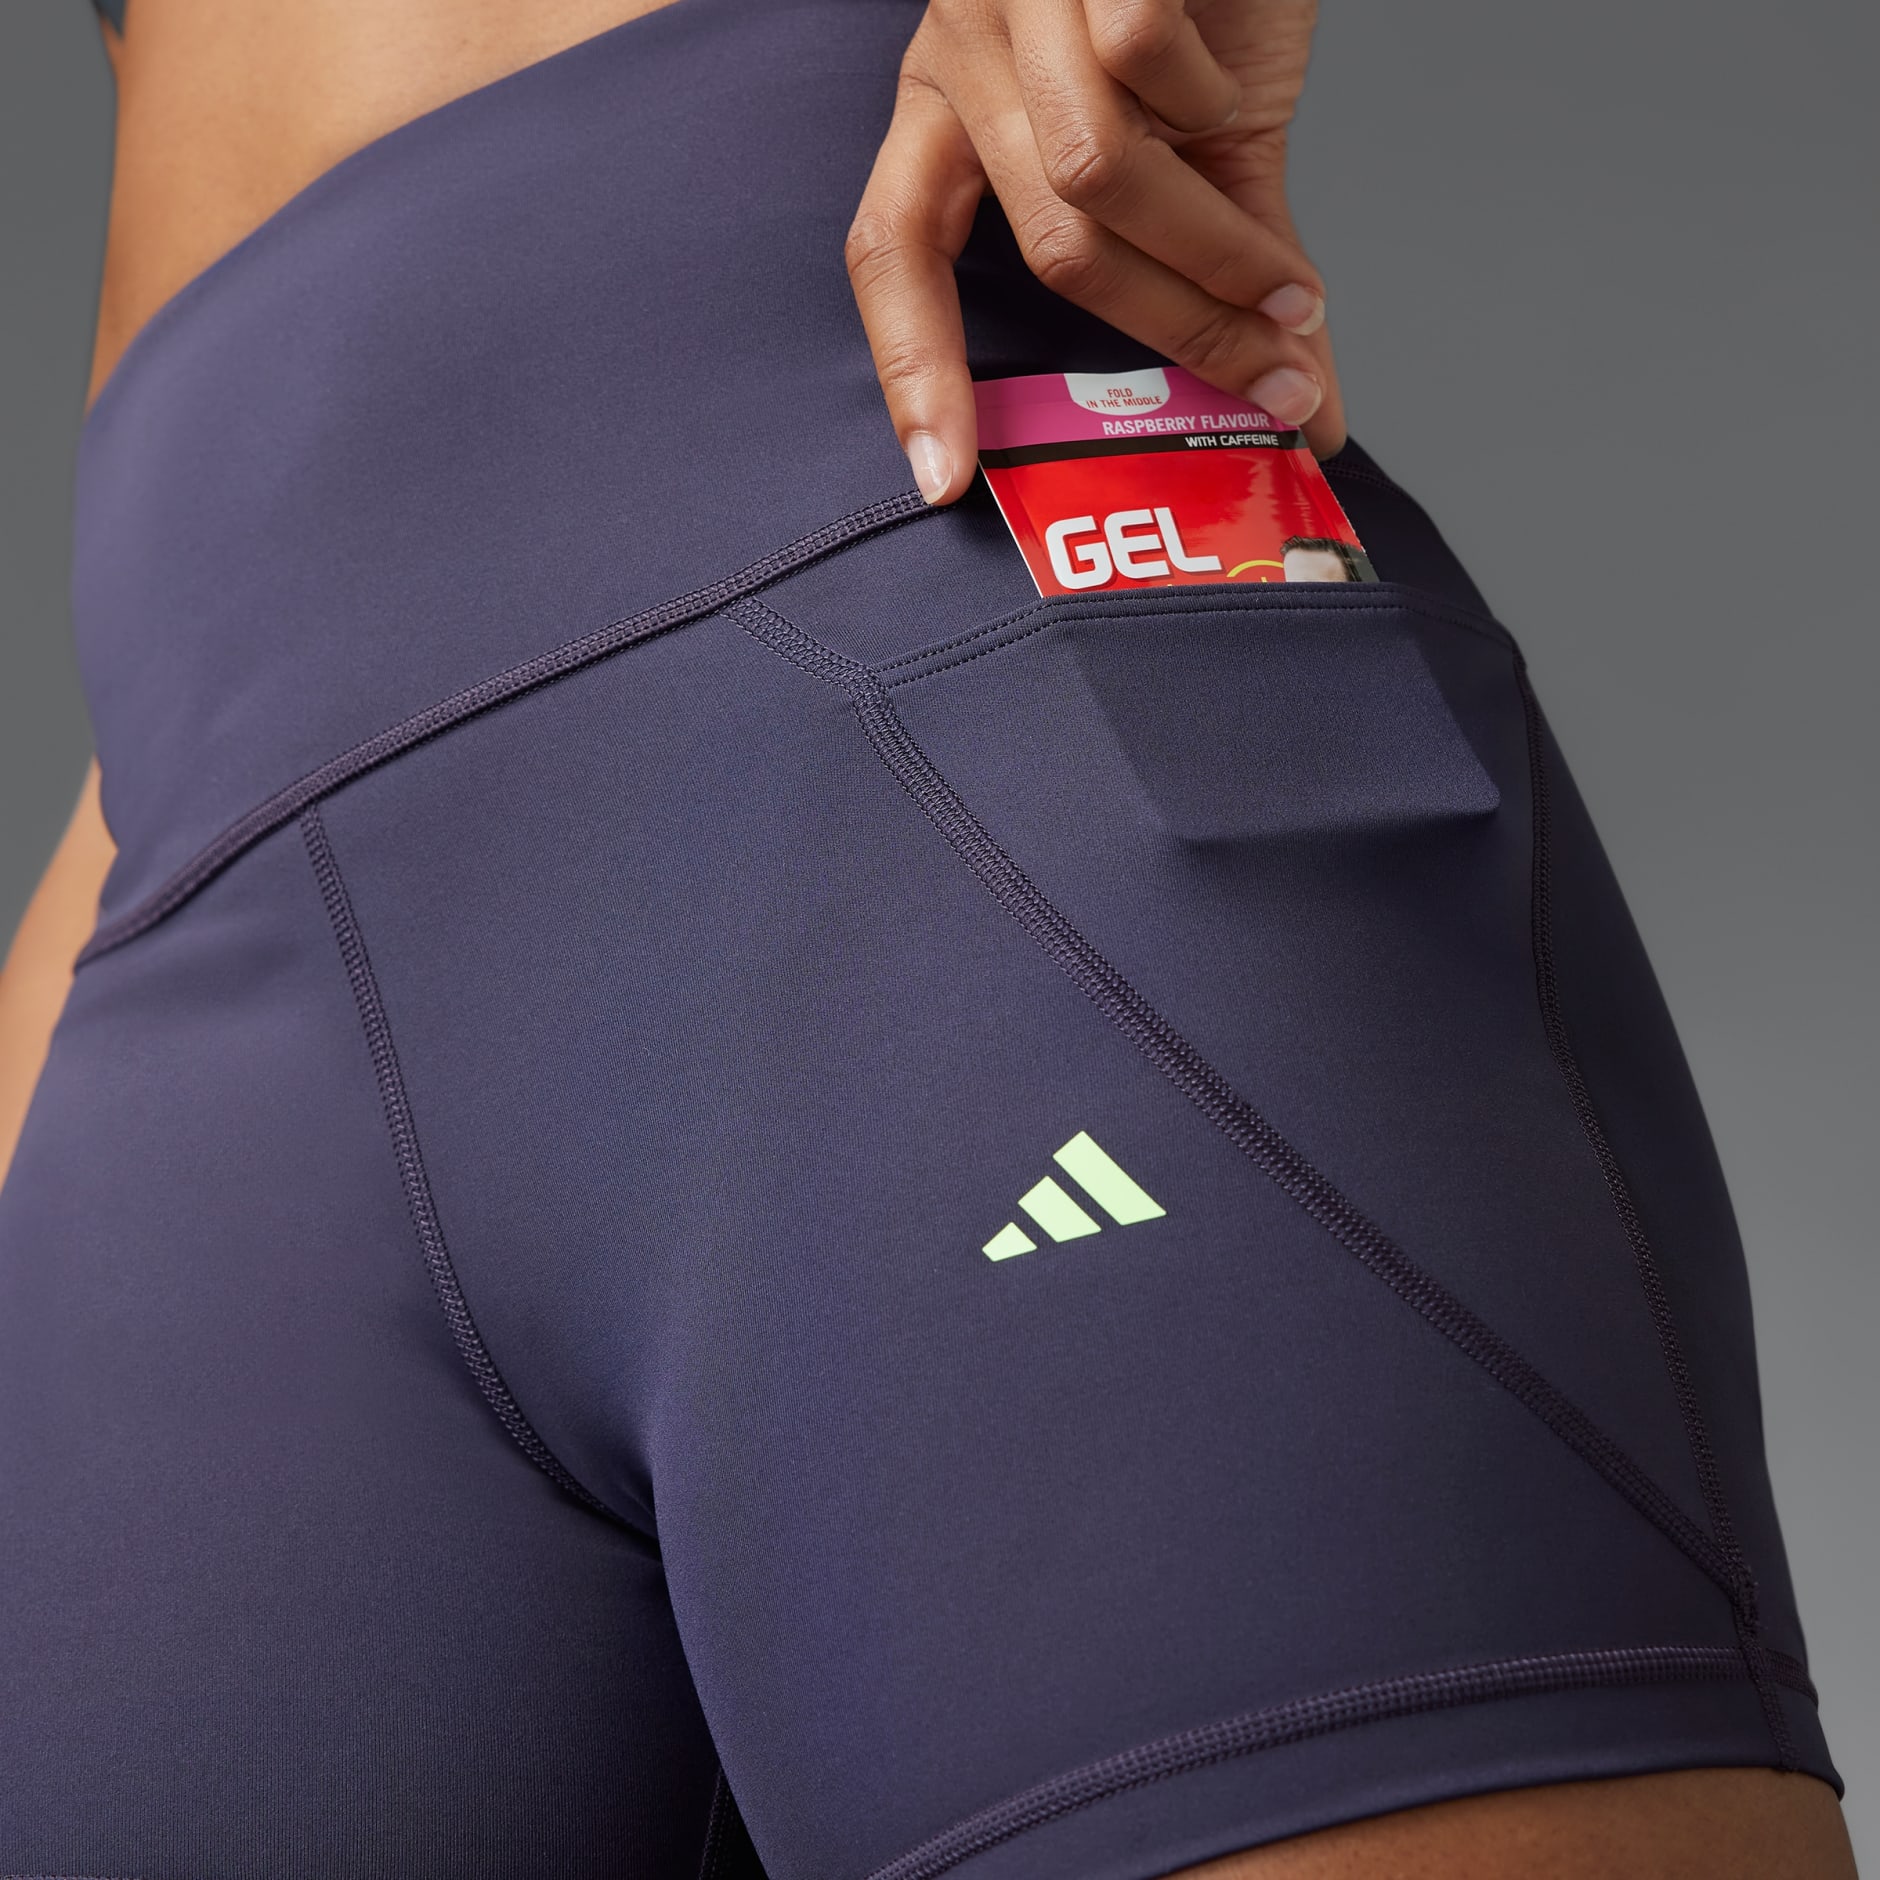 Firm Ass in aurola leggings - Spandex, Leggings & Yoga Pants - Forum